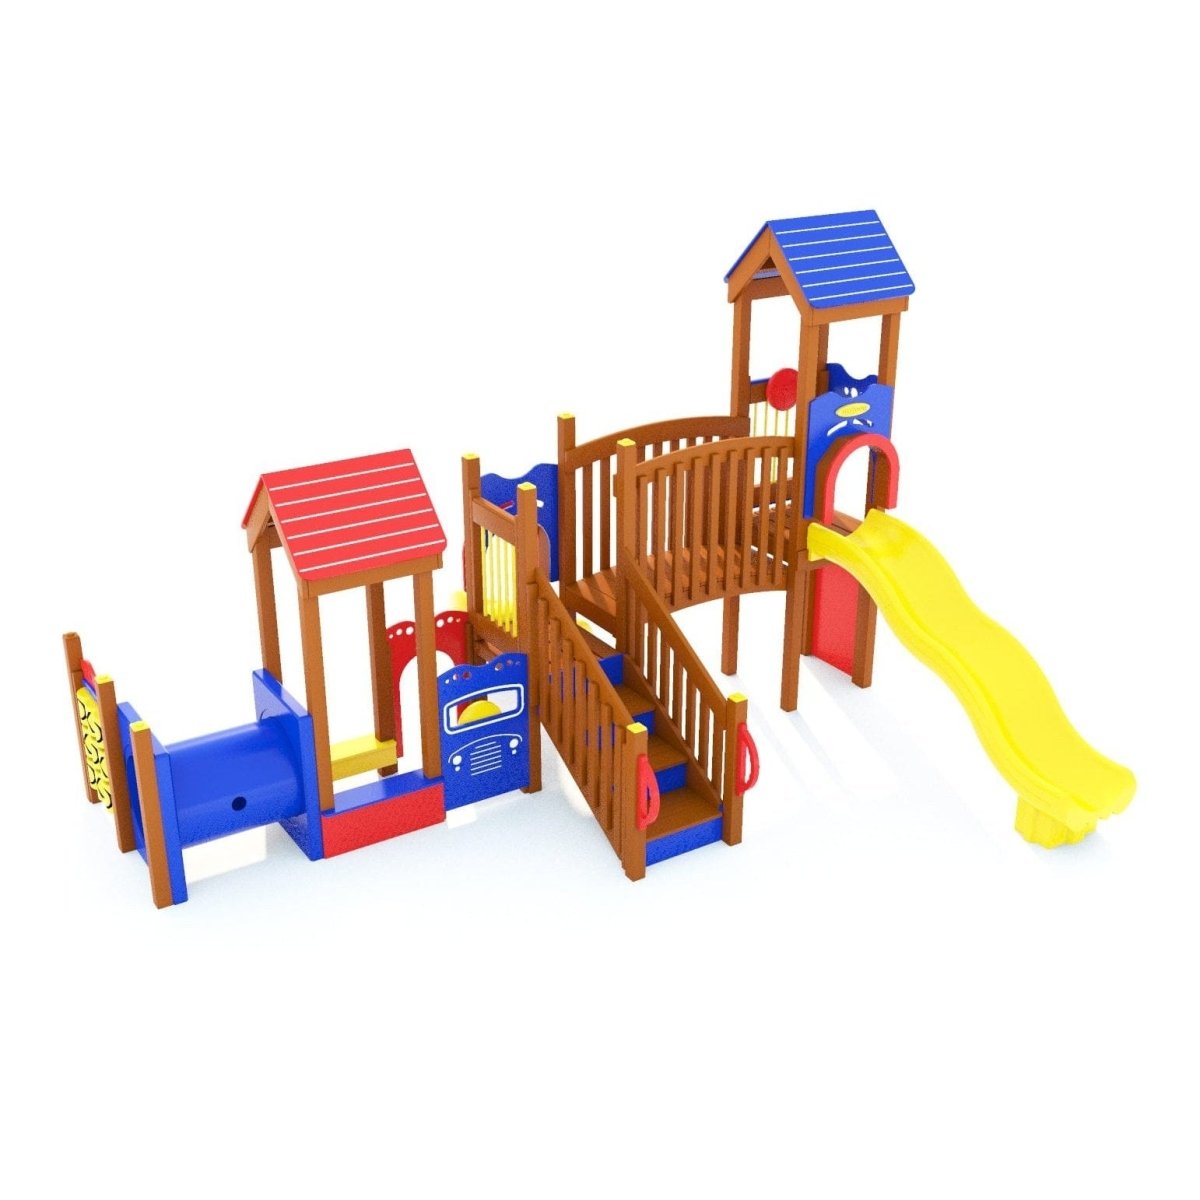 Zenith Playset - Preschool Playgrounds - Playtopia, Inc.